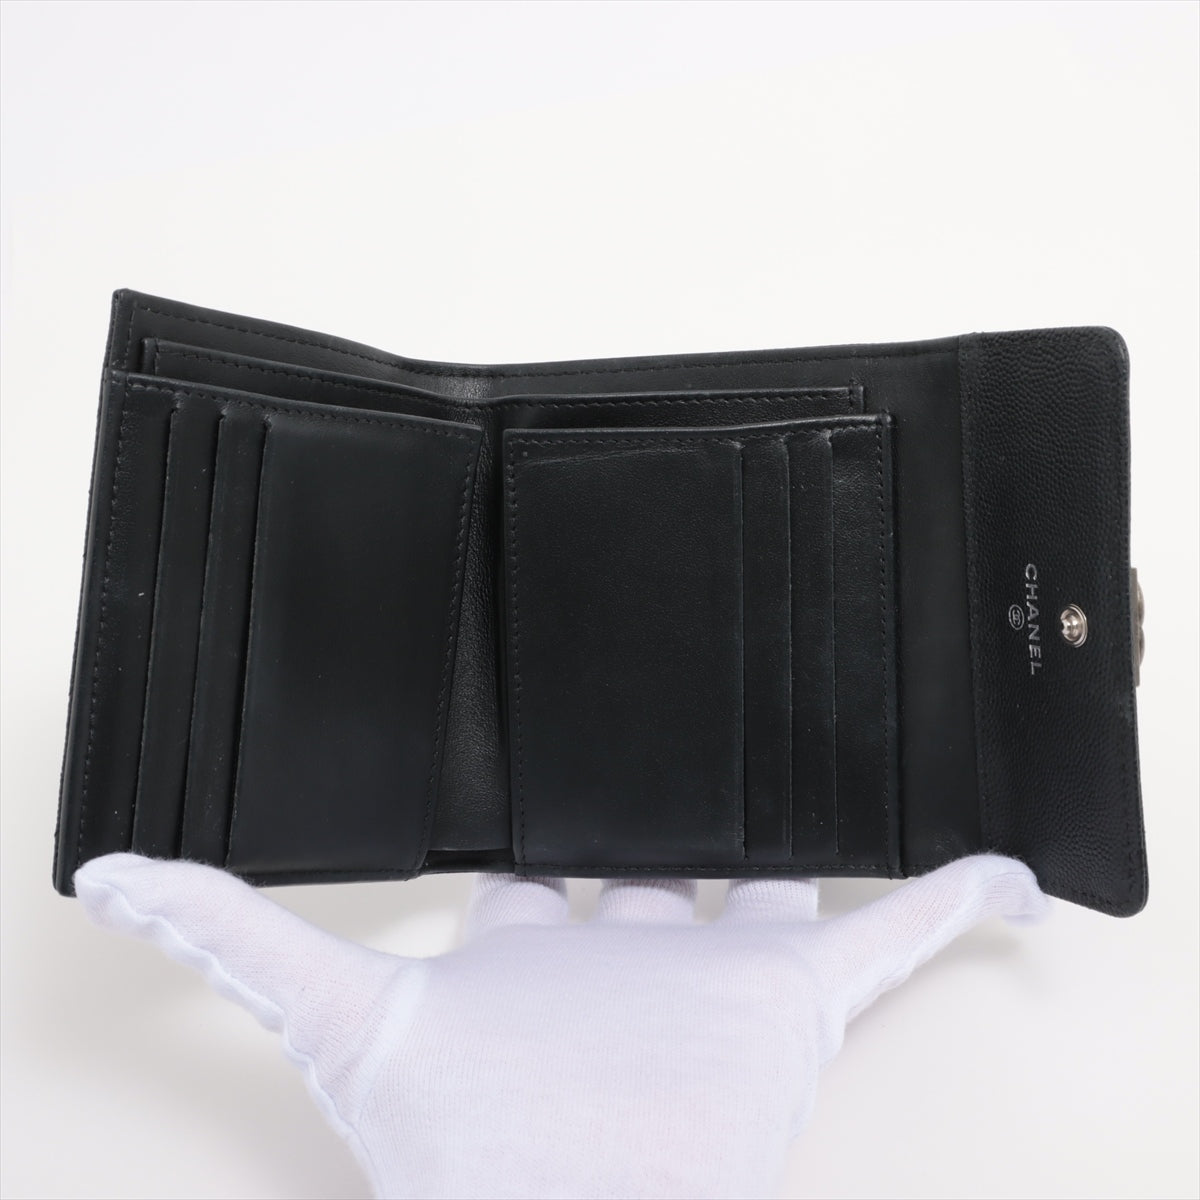 Chanel Boy Chanel Caviarskin Compact Wallet threefold Black Silver Metal fittings 31st